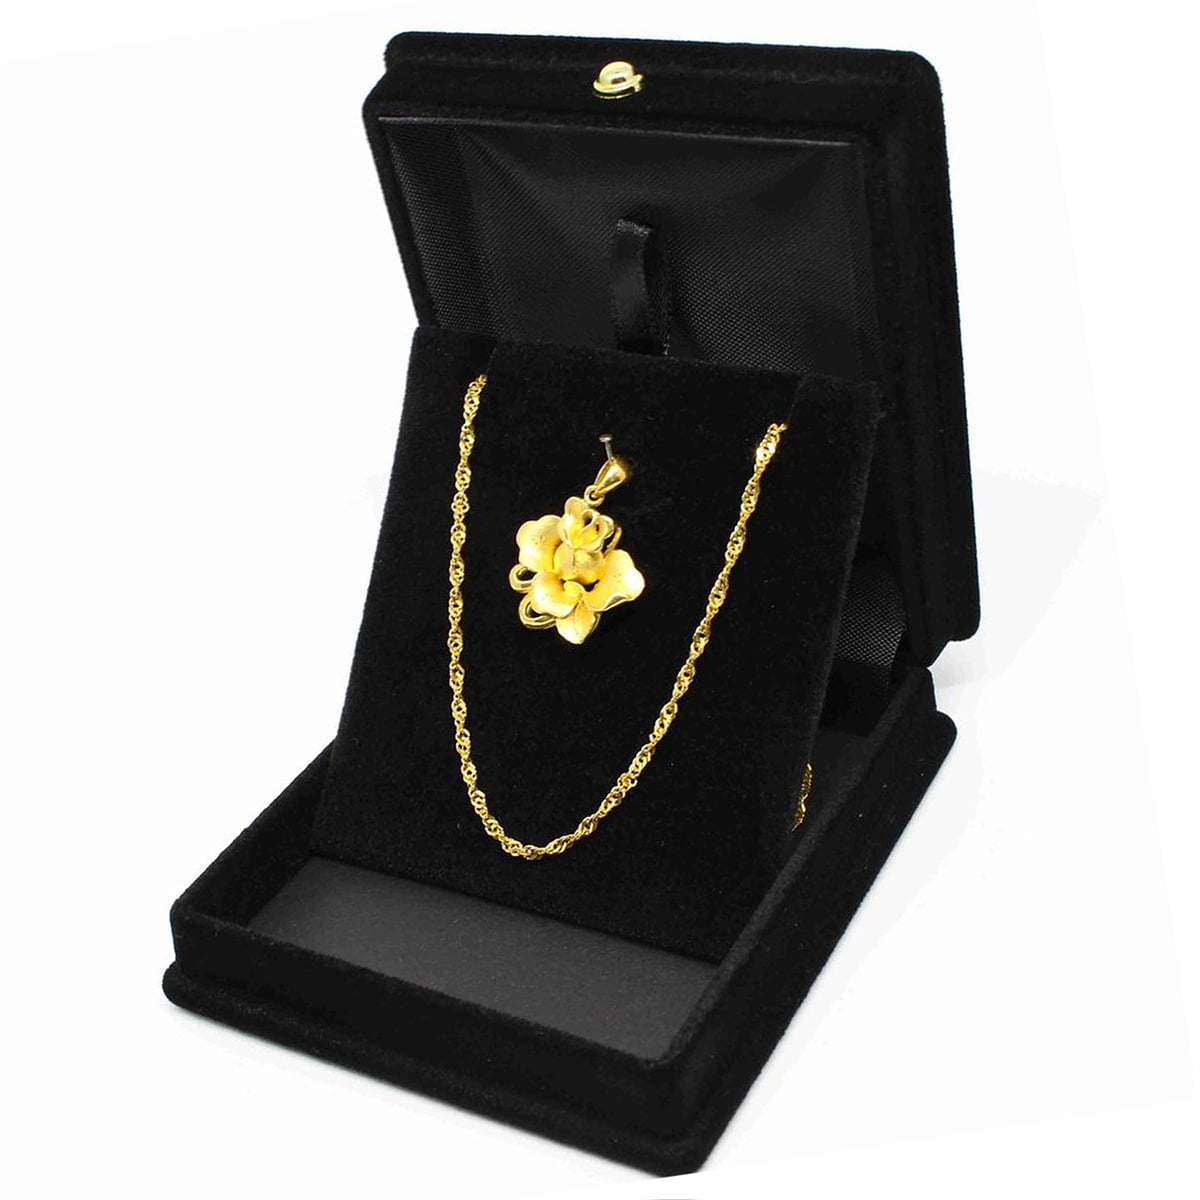 Black Velvet Jewelry Box Necklace Chain Display Storage Box Gift Case Organizer 